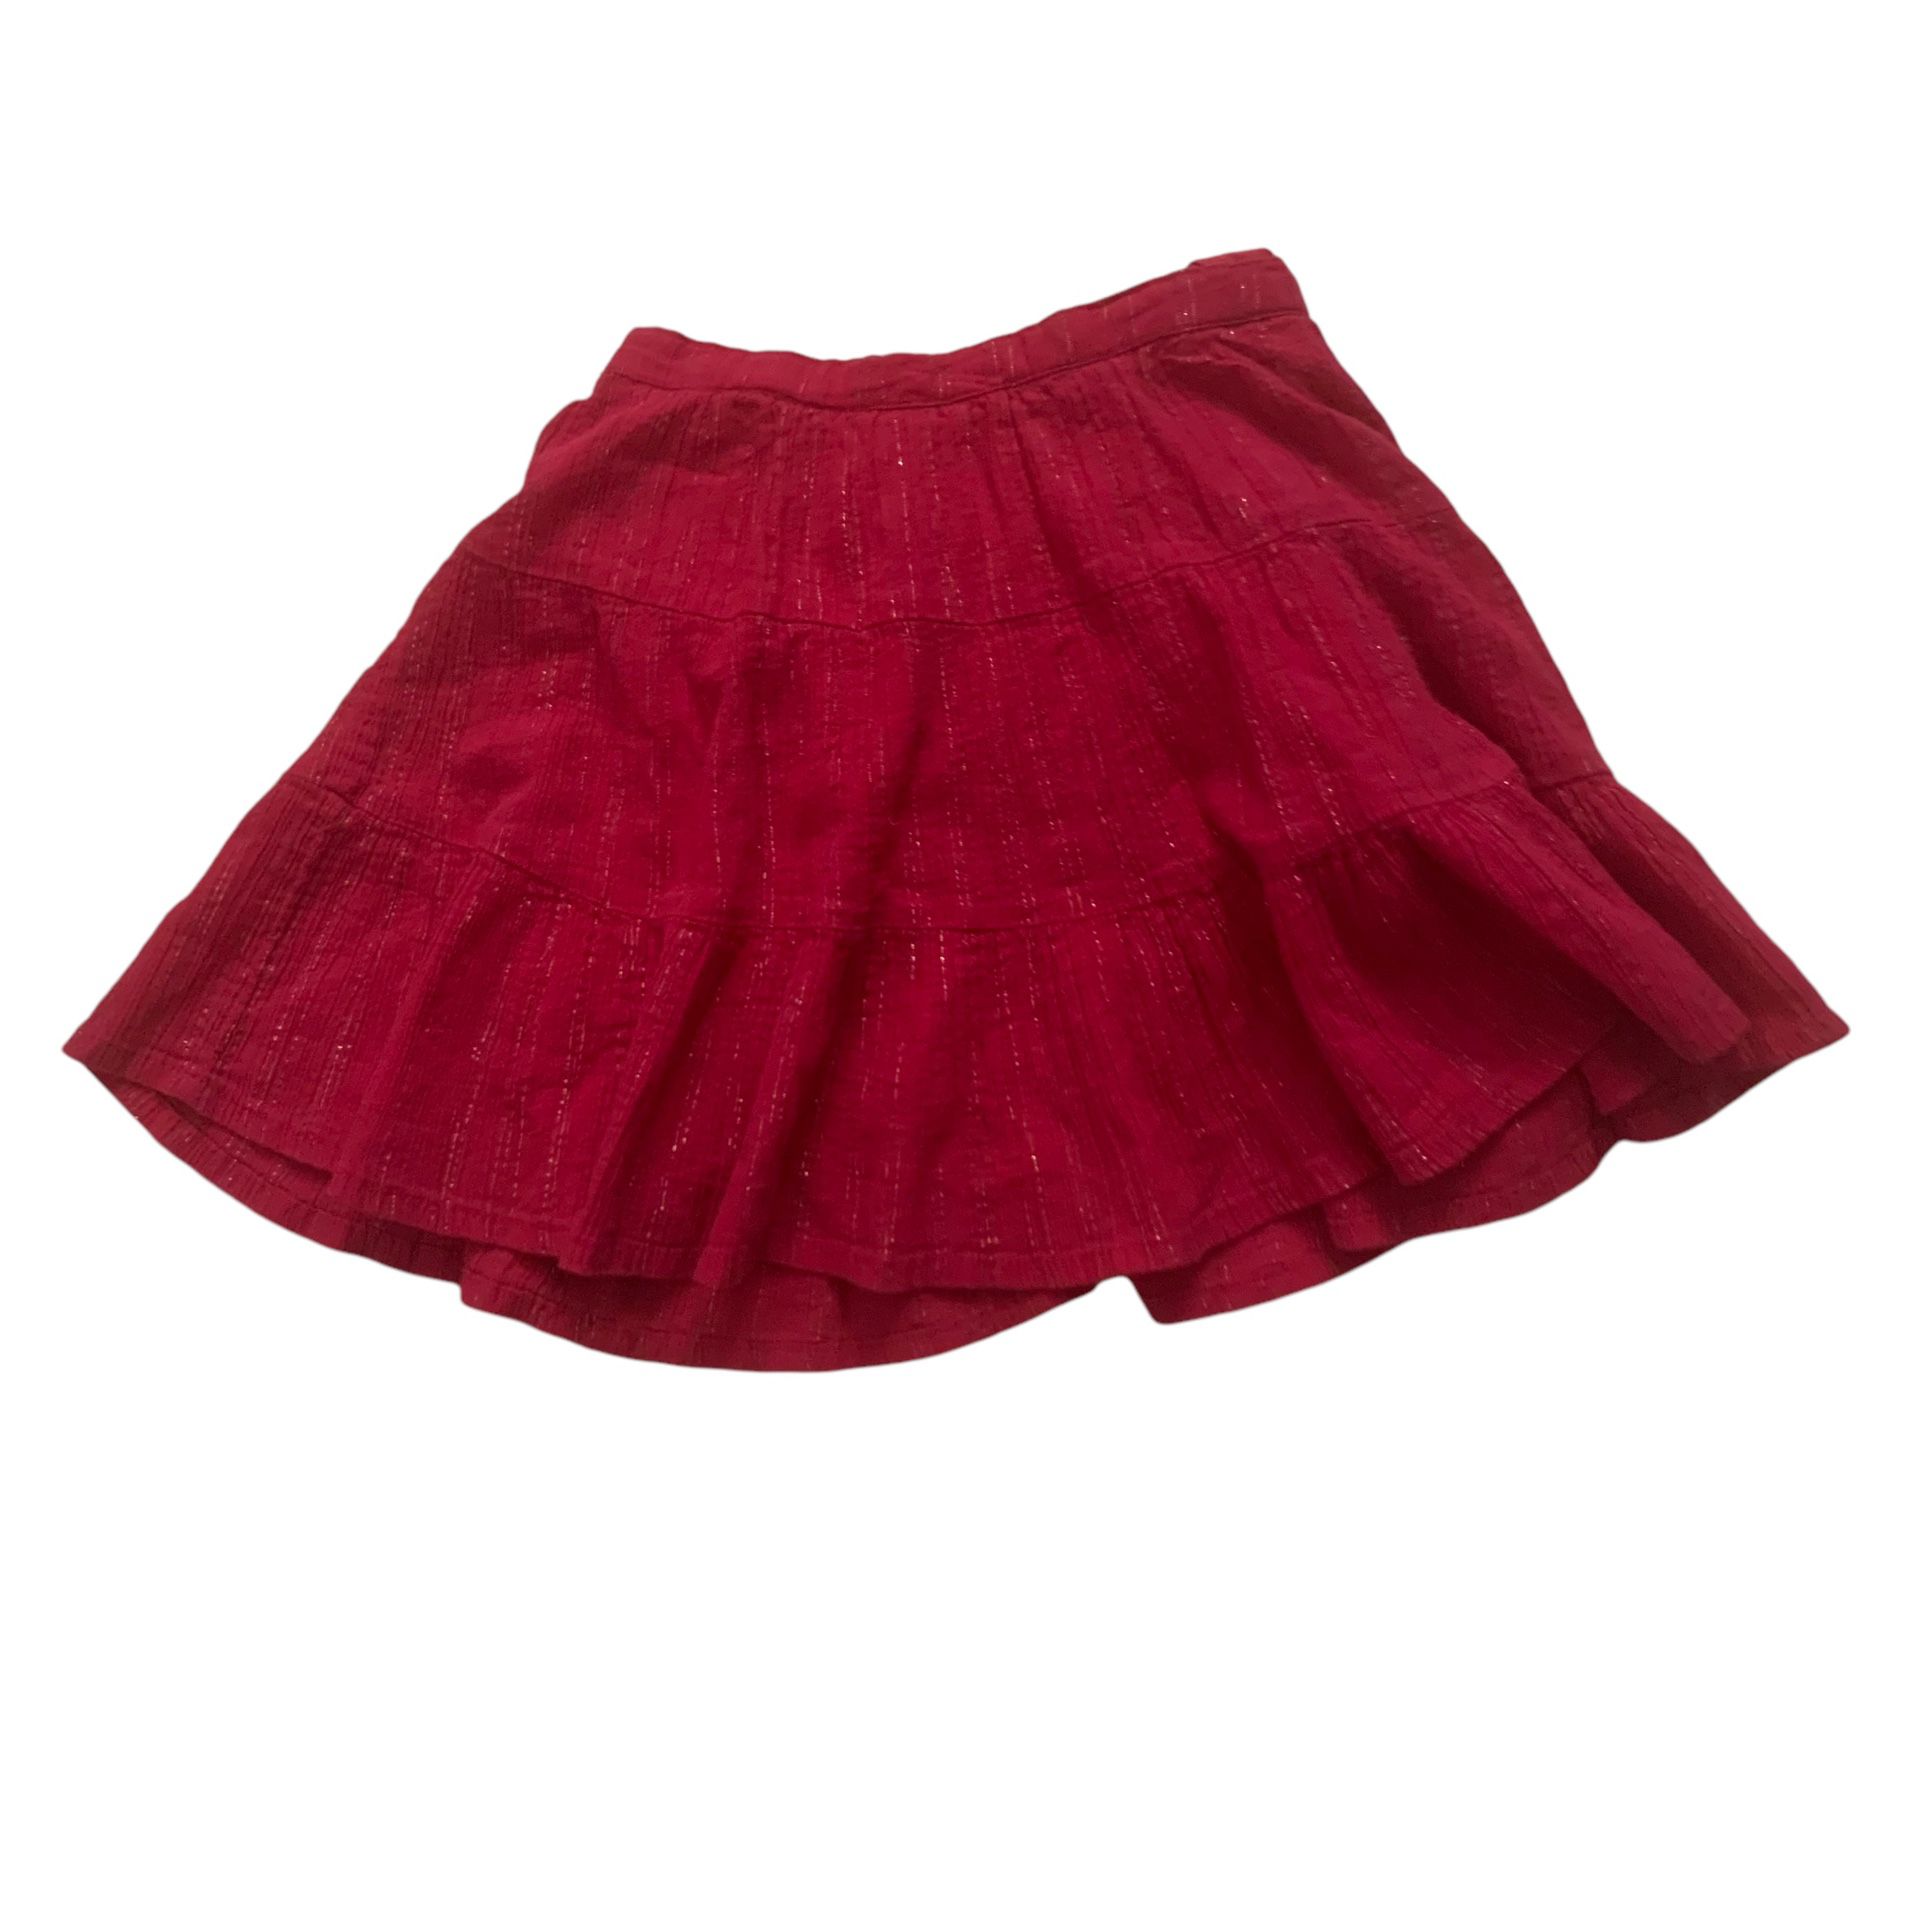 Old Navy Sz 2T Toddler Skirt Pink